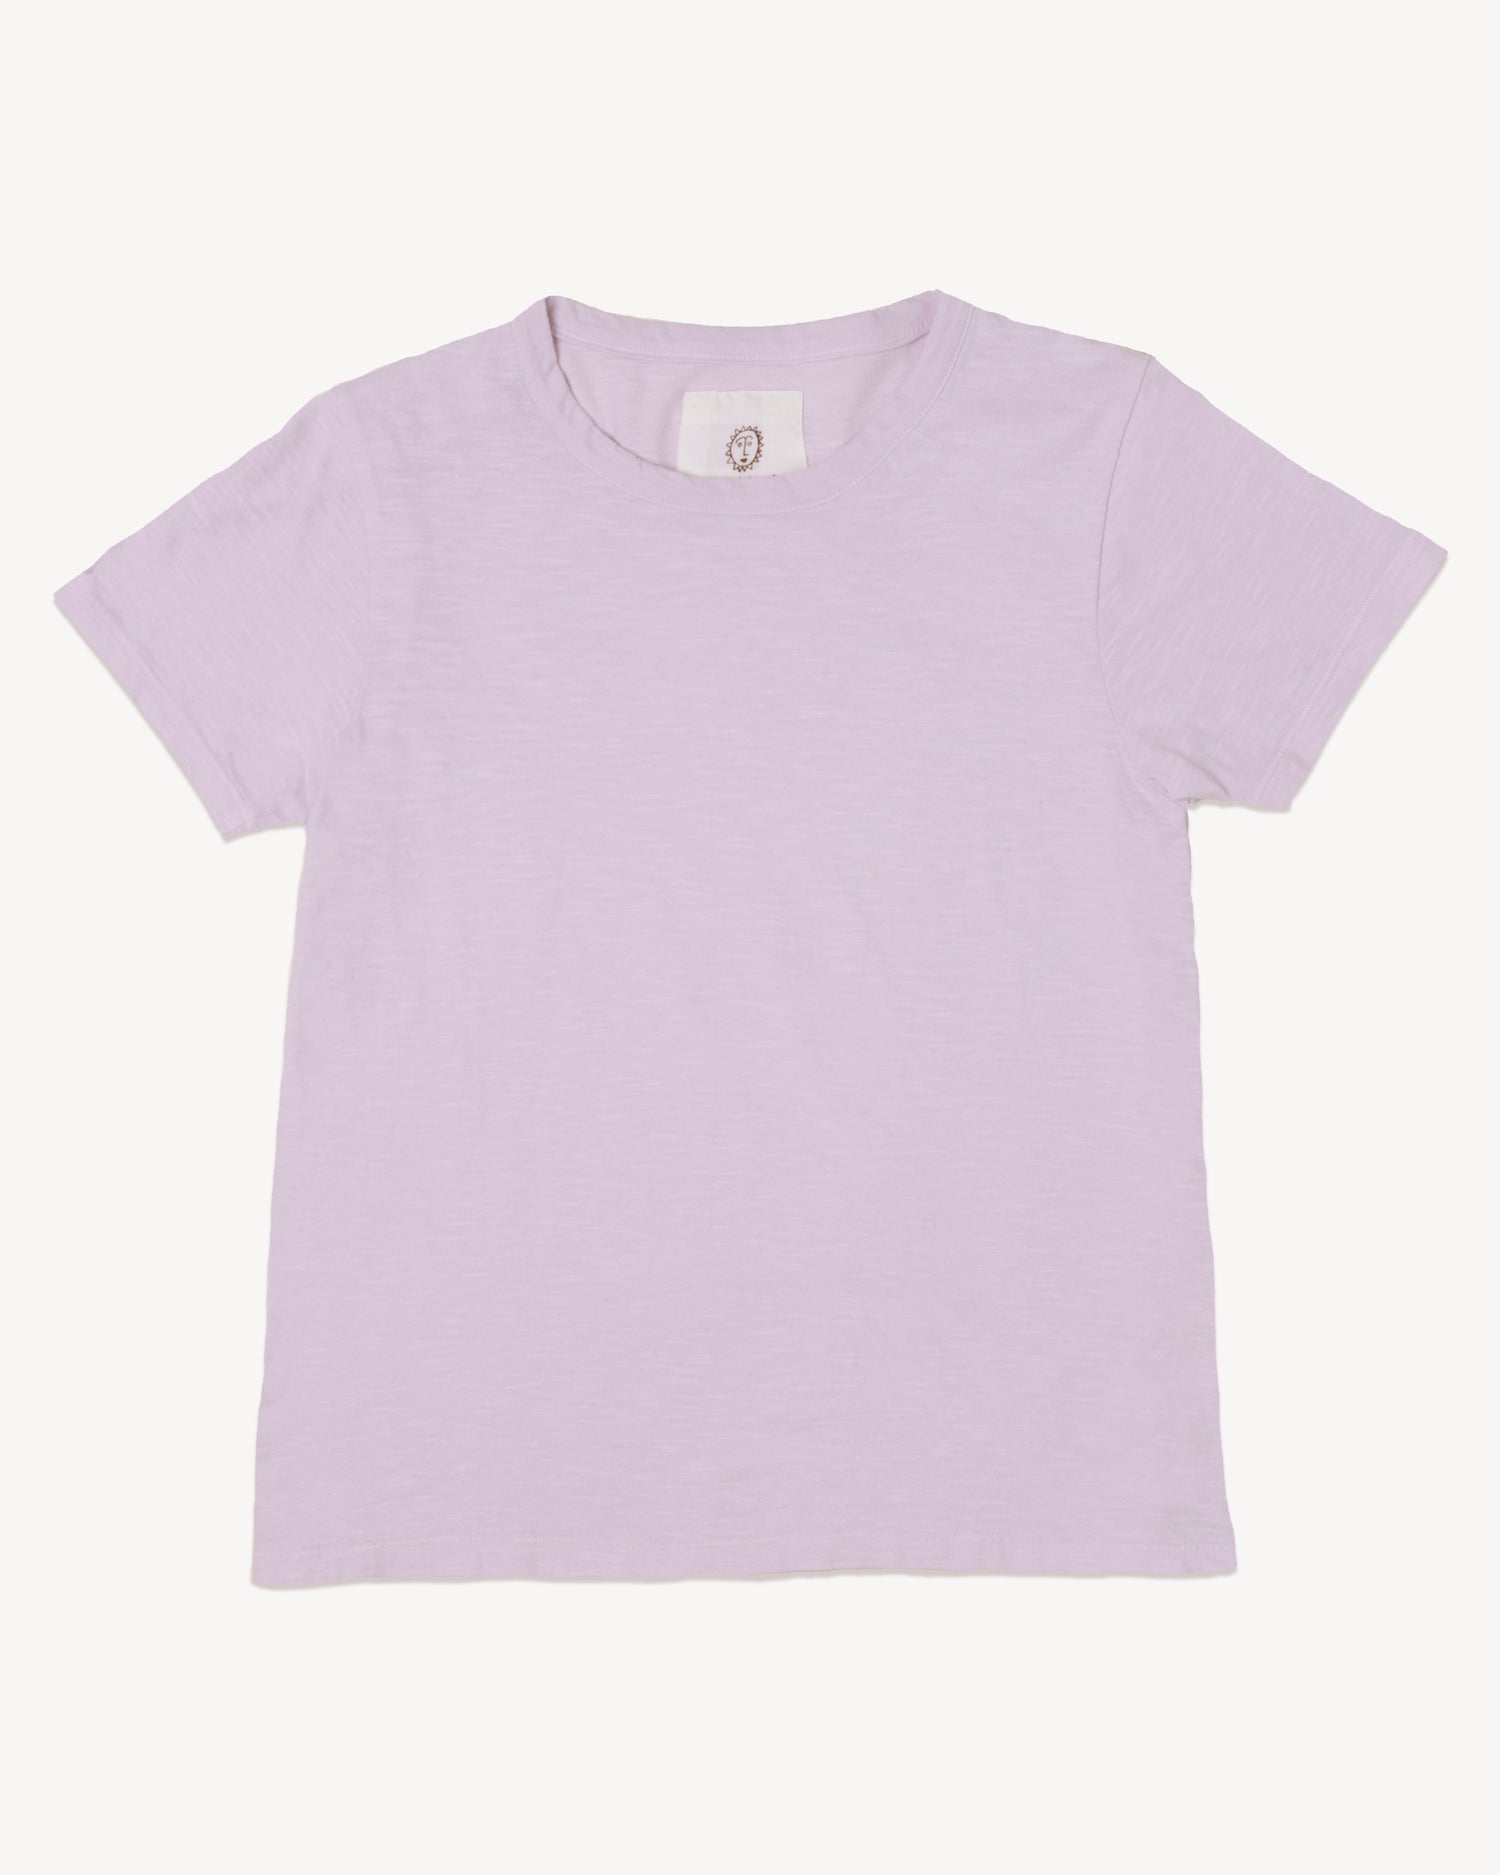 Saturday Tee - Knit T-Shirt - Orchid Hush - Printfresh